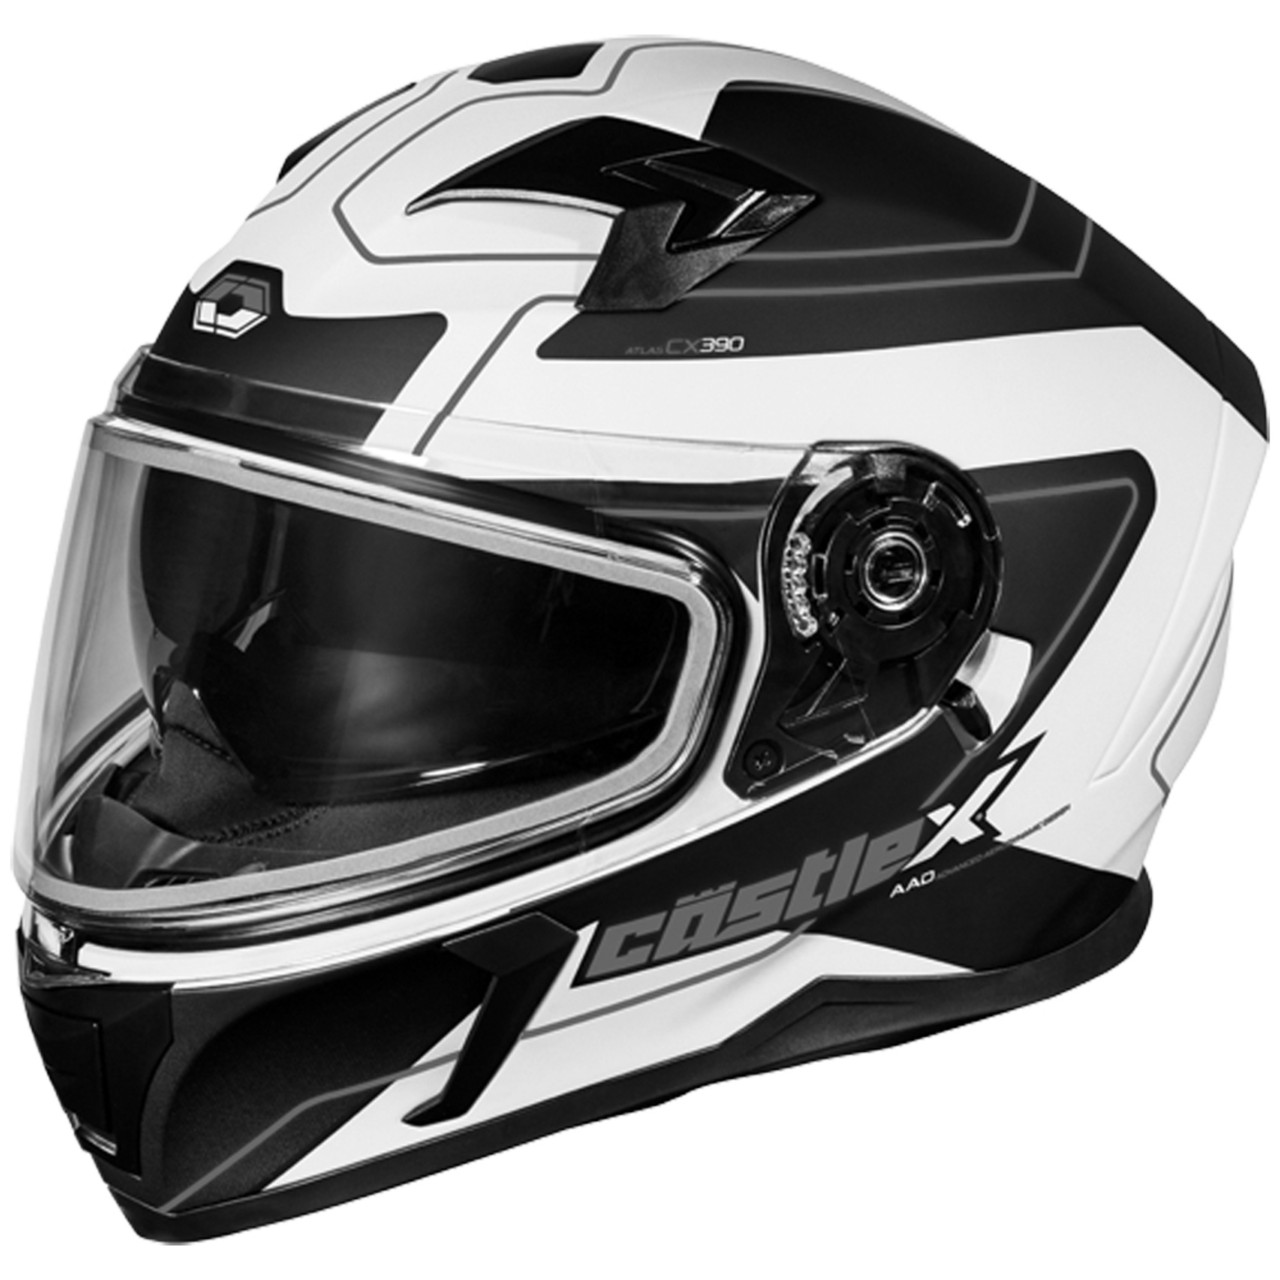 Castle X New 2X-Large Matte White/Black CX390 Atlas Snowmobile Helmet, 36-14109